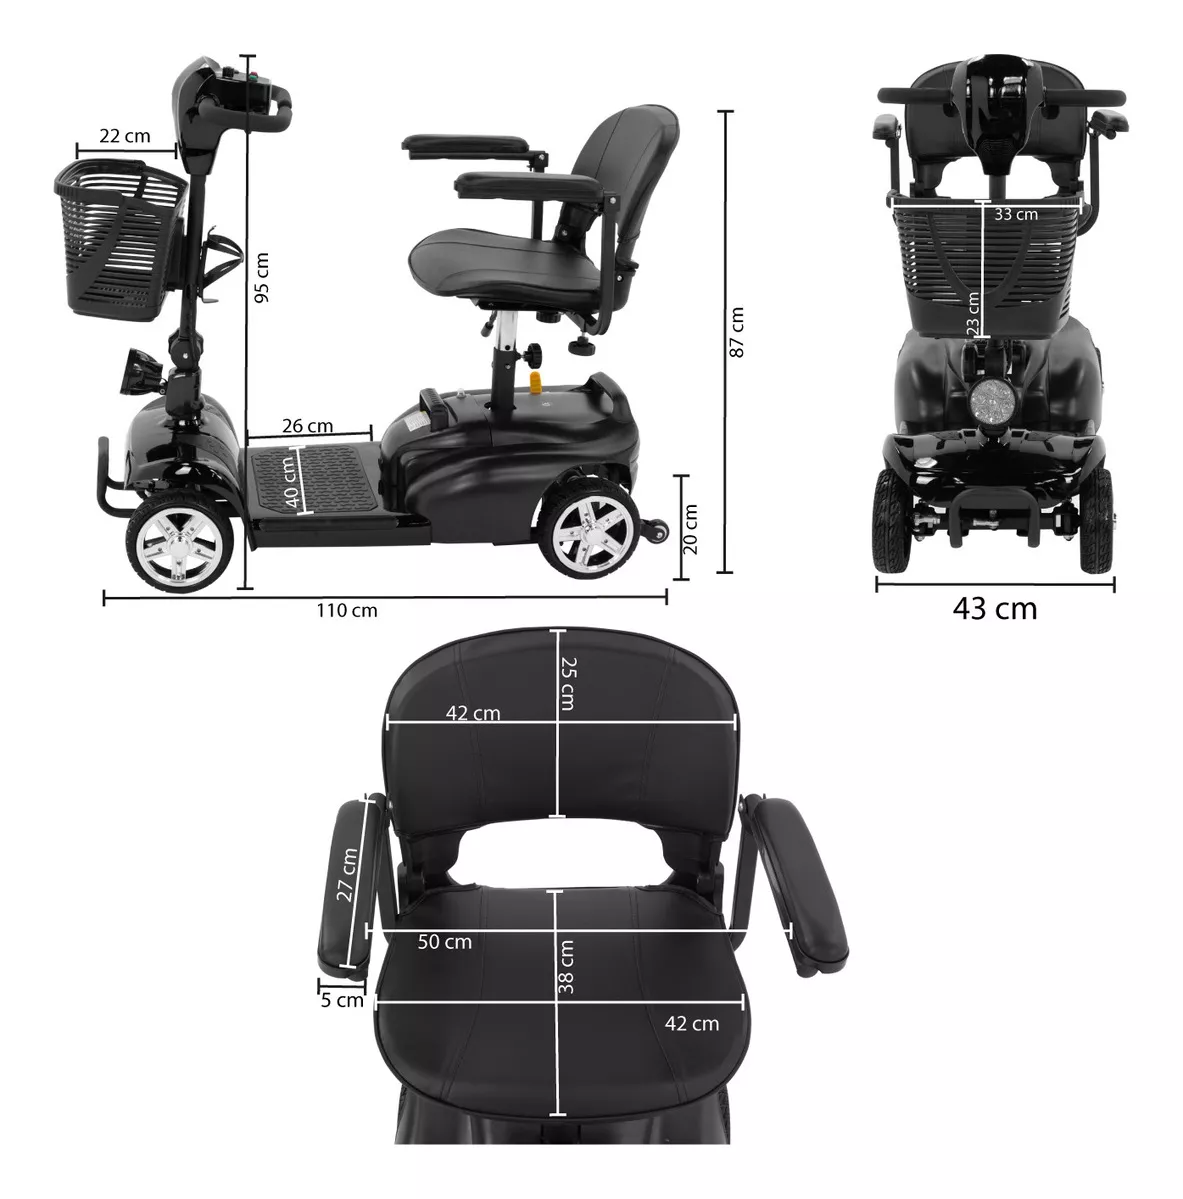 Tercera imagen para búsqueda de scooter electrico para discapacitados